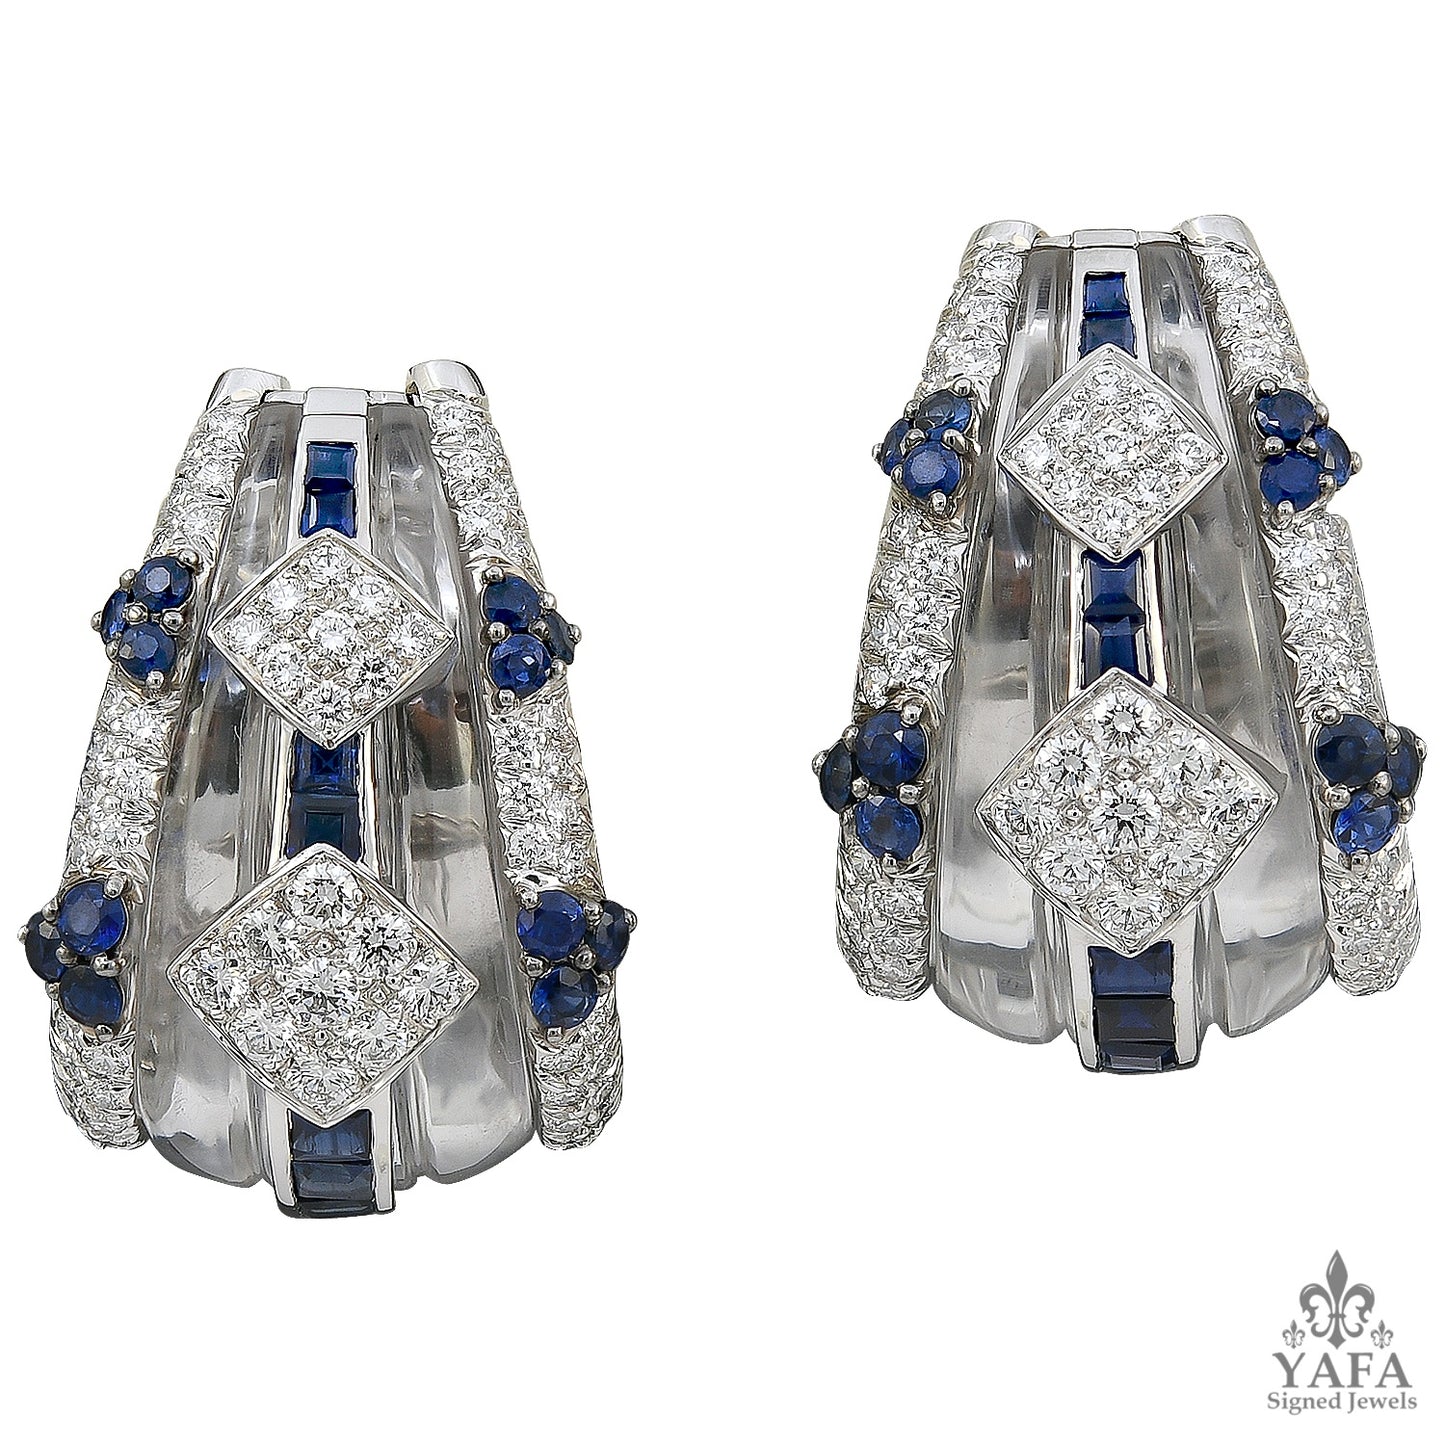 DAVID WEBB Carved Rock Crystal, Sapphire, & Diamond Earrings